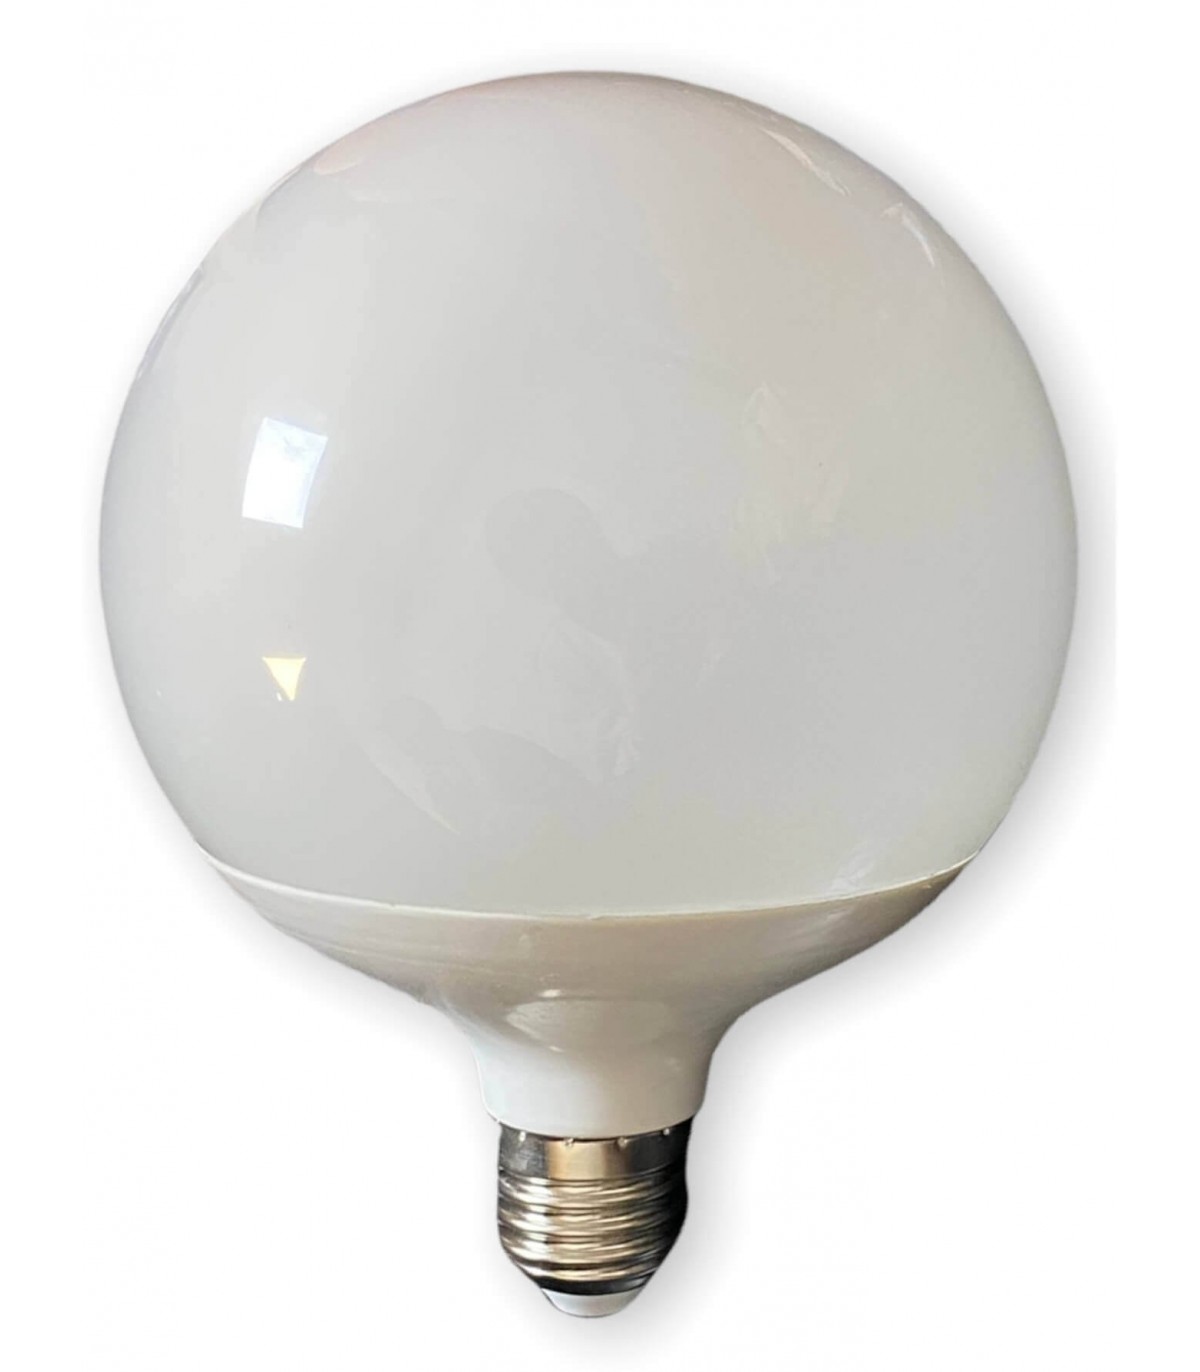 Lampe spot LED GU10 5W Lumière blanche (6500k) A Reflecteur